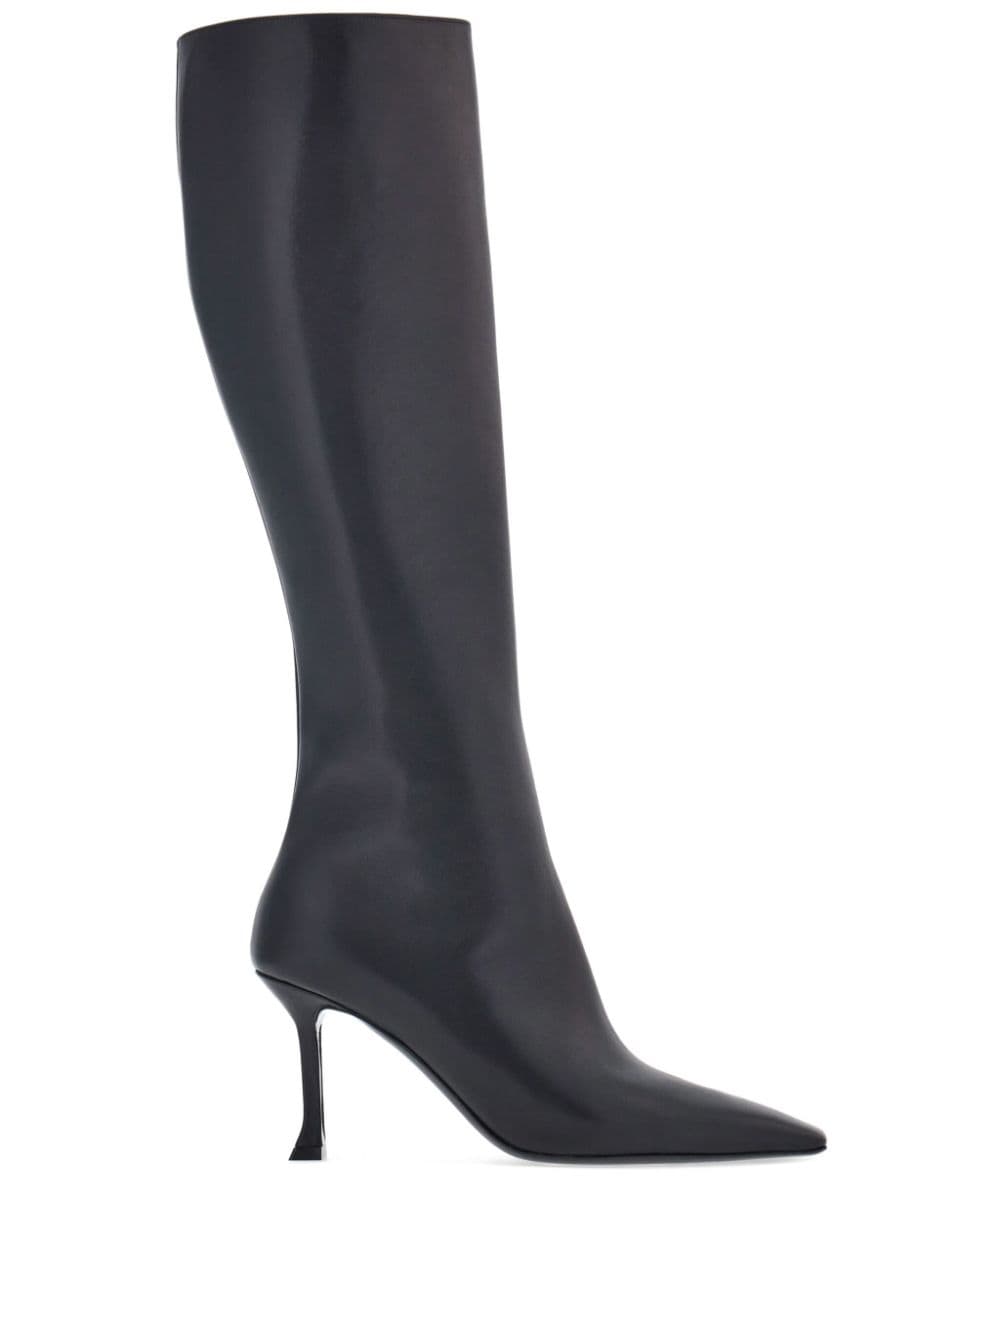 Ferragamo pointed-toe leather boots - Black